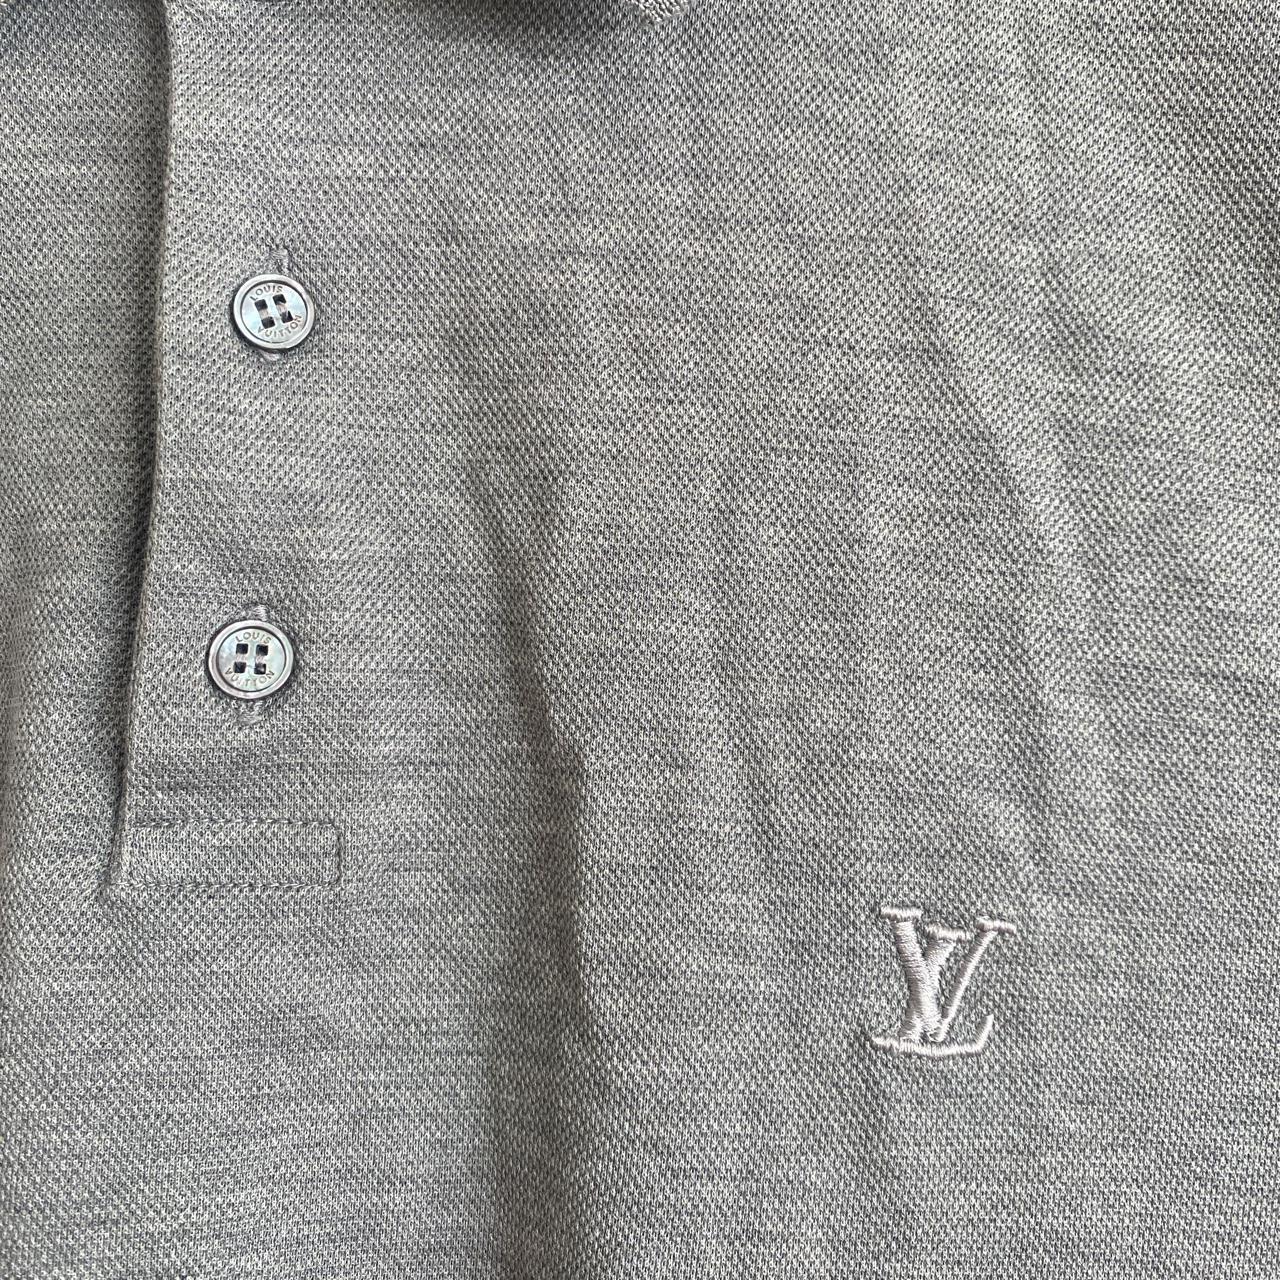 Authentic Louis Vuitton Men's Shirt In great - Depop